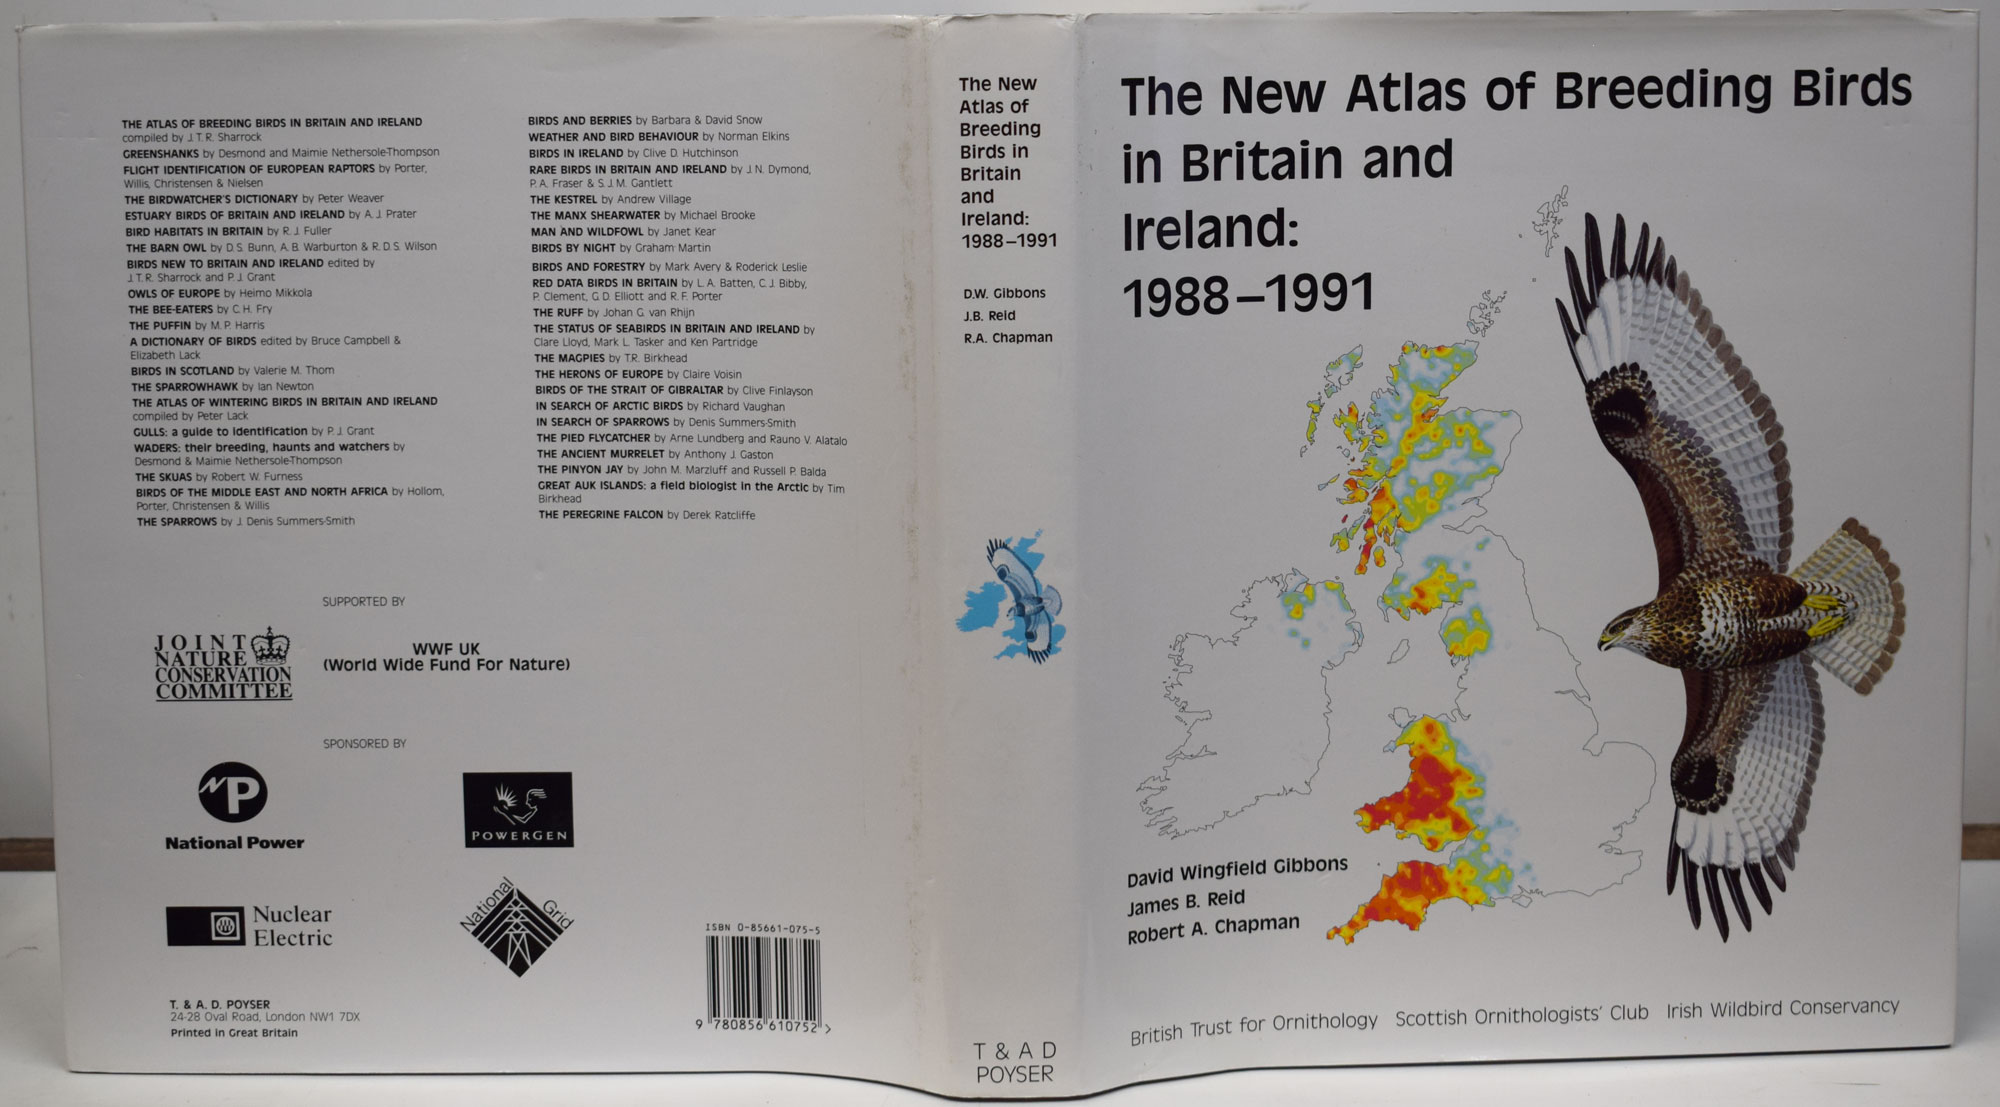 The New Atlas of Breeding Birds in Britain and Ireland: 1988 - 1991.